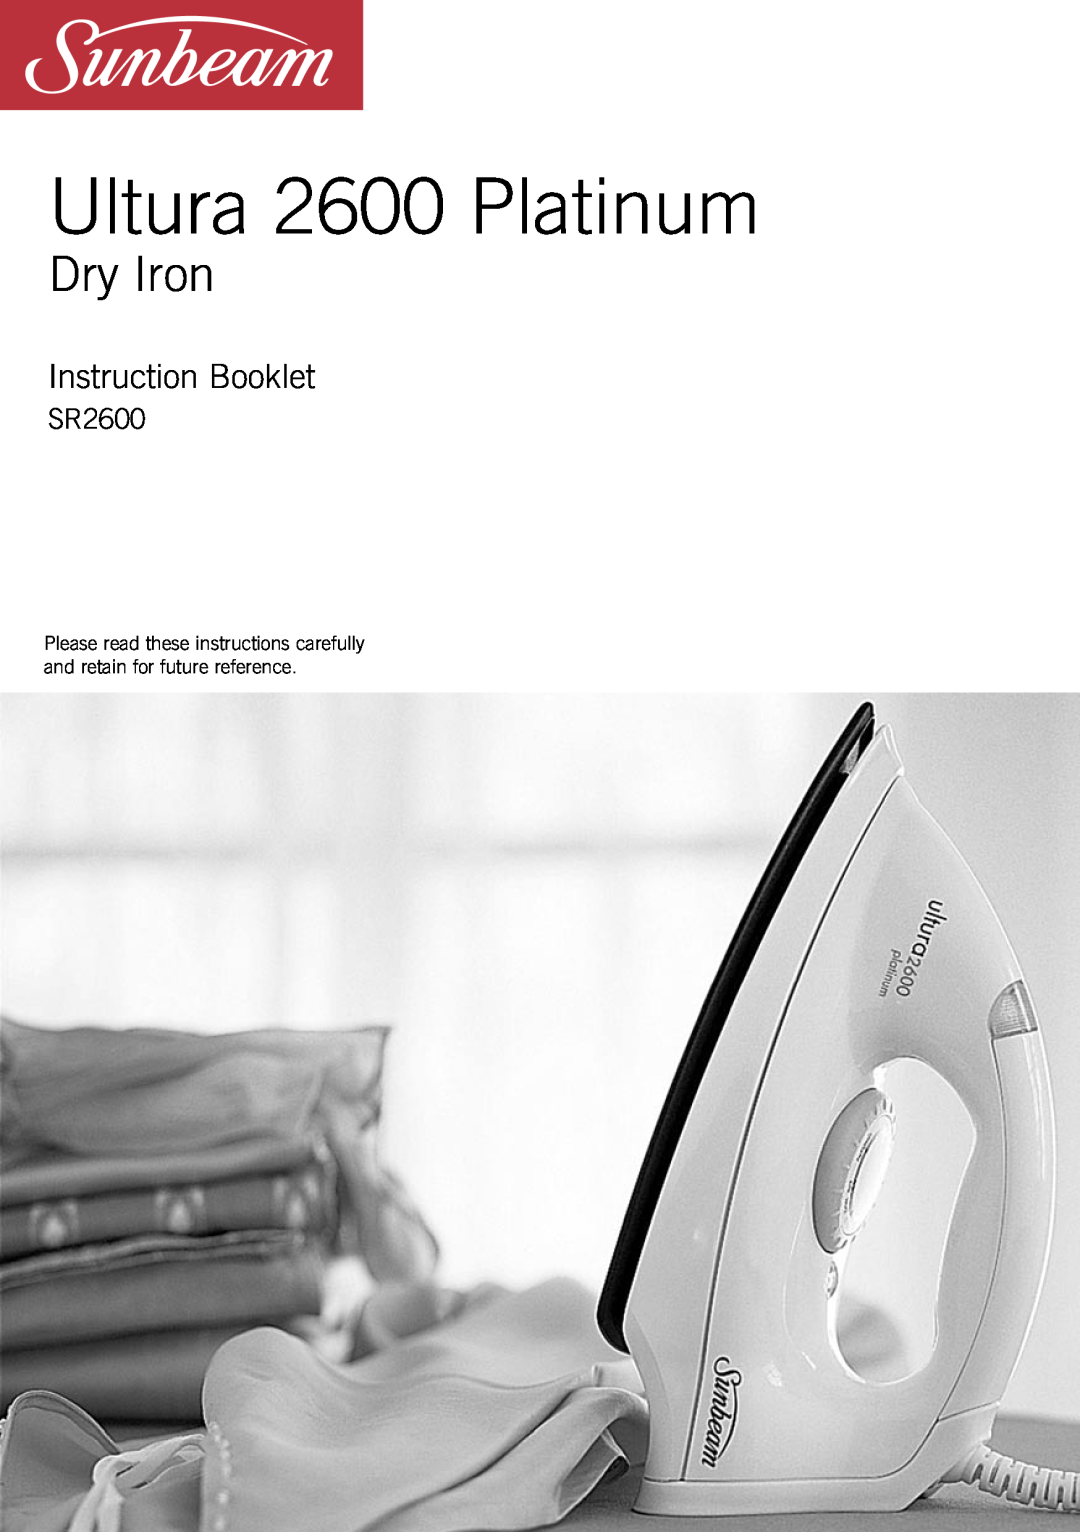 Sunbeam SR2600 manual Ultura 2600 Platinum, Dry Iron, Instruction Booklet 